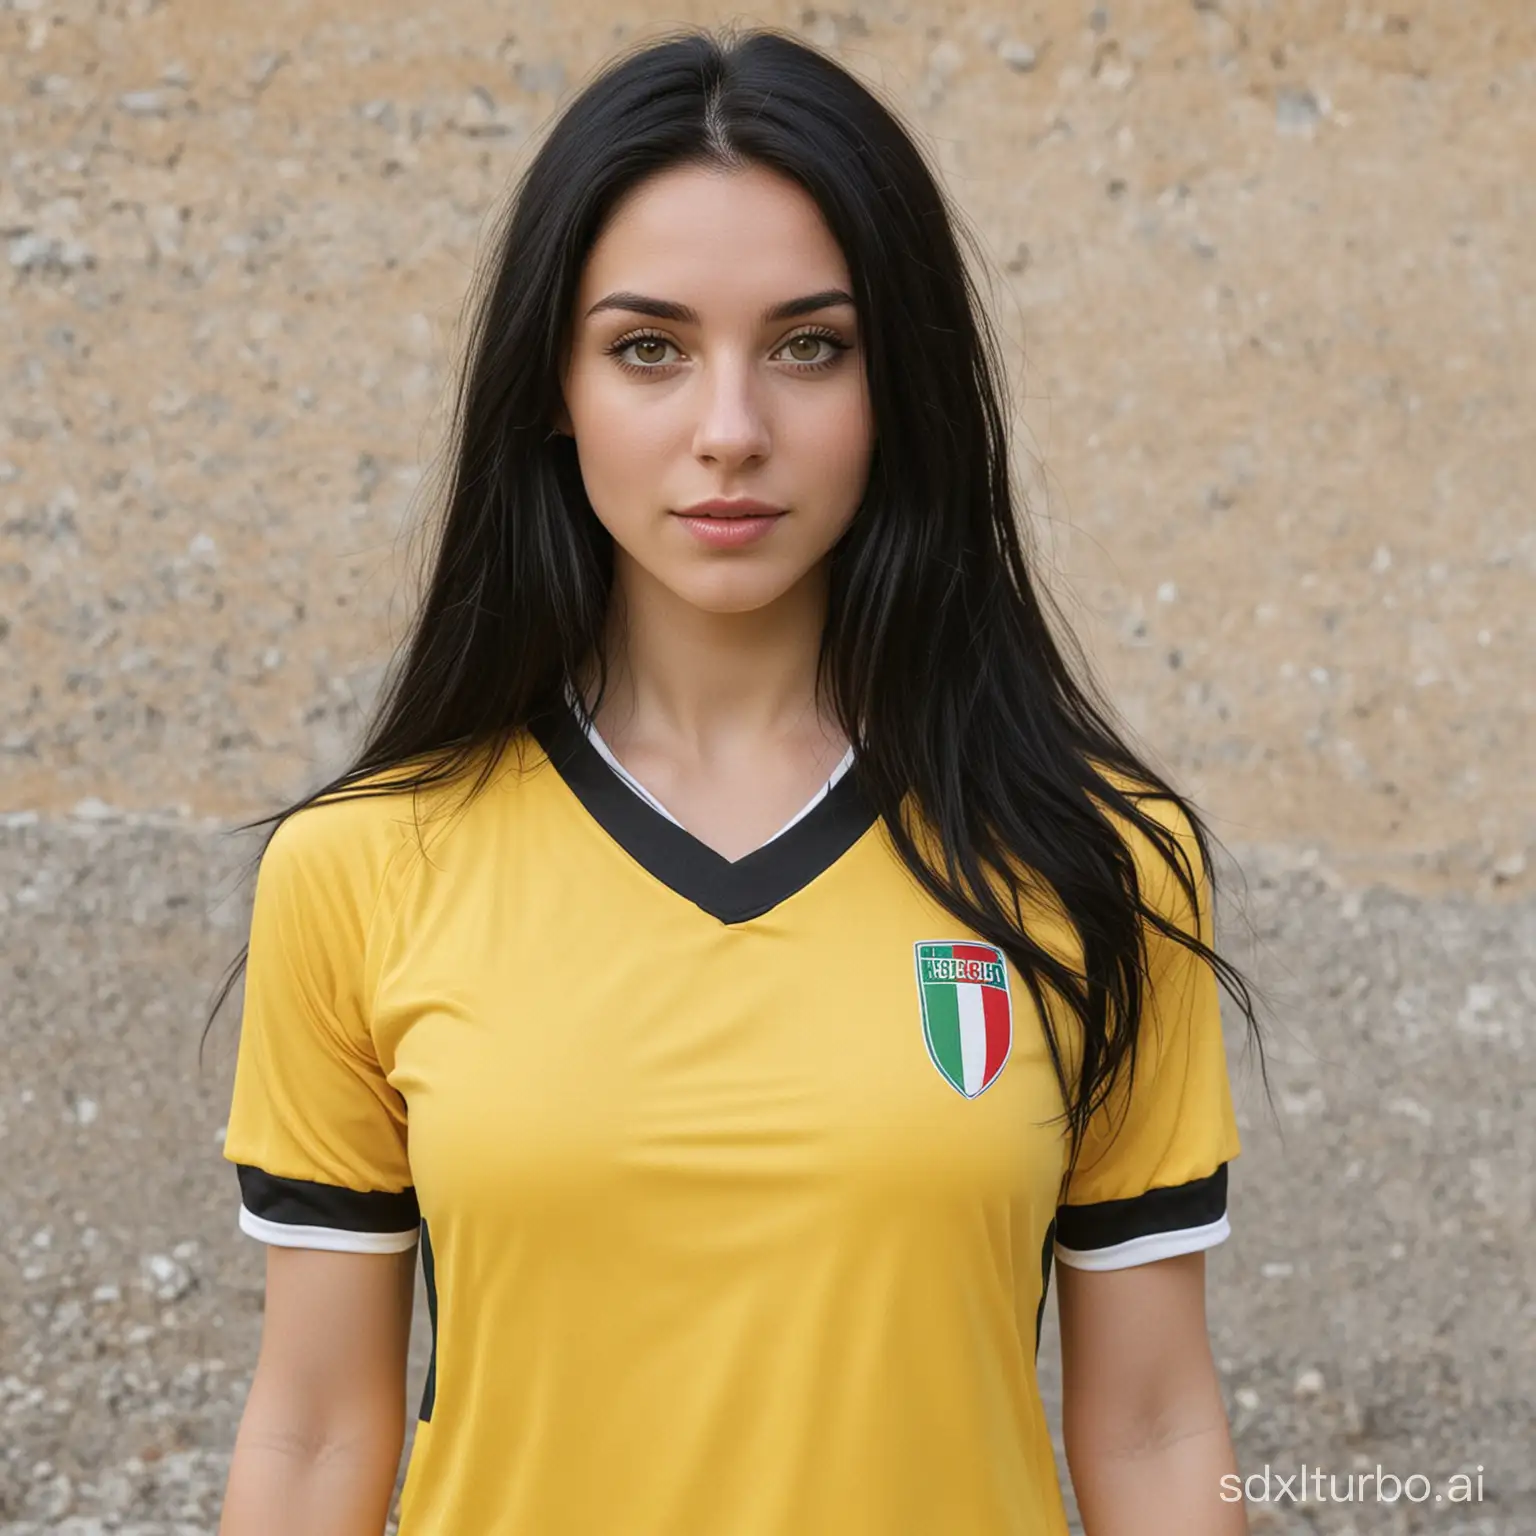 Italian-Girl-with-Long-Black-Hair-in-Yellow-Soccer-Shirt